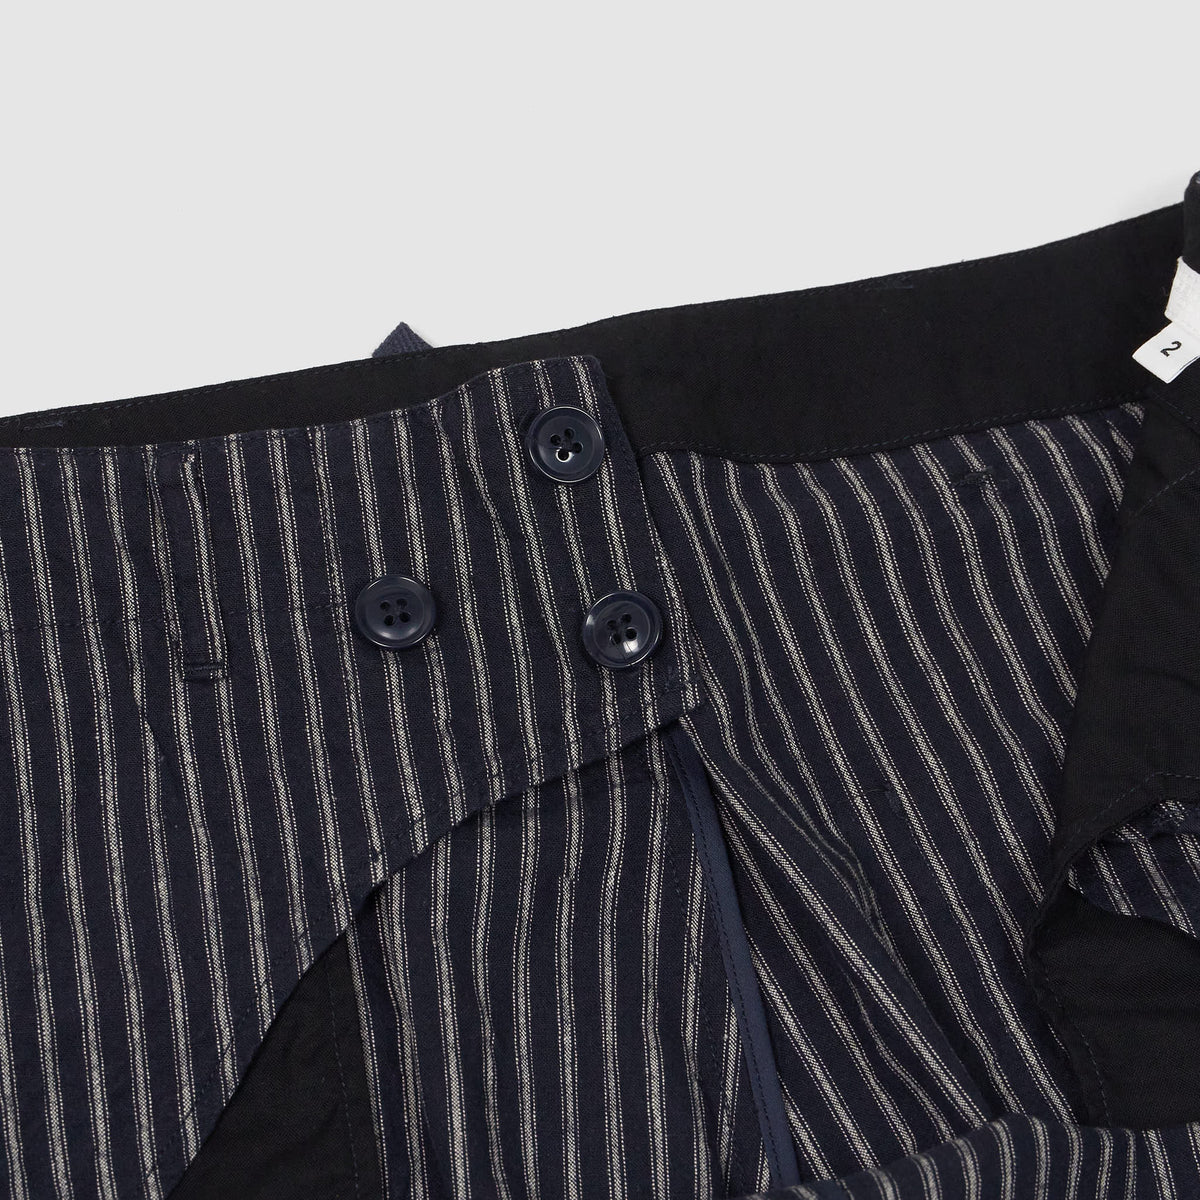 Engineered Garments Ladies Vintage Stripe Sailor Pants